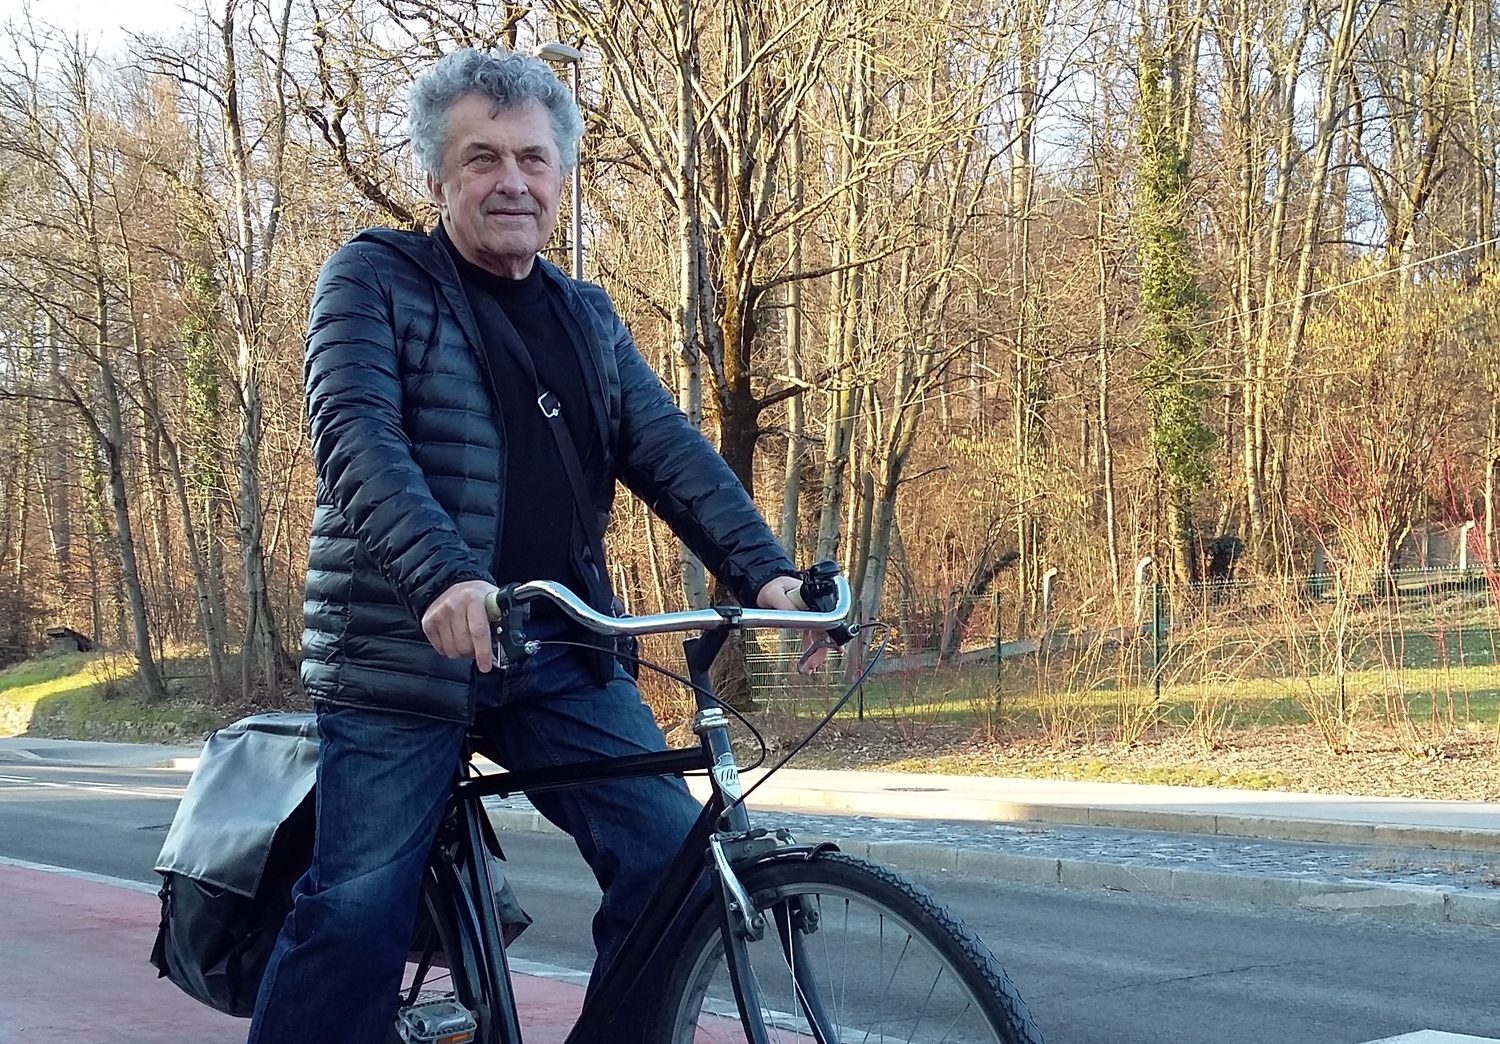 Prof. Janez Koželj, podžupan Mestne občine Ljubljana, na kolesu